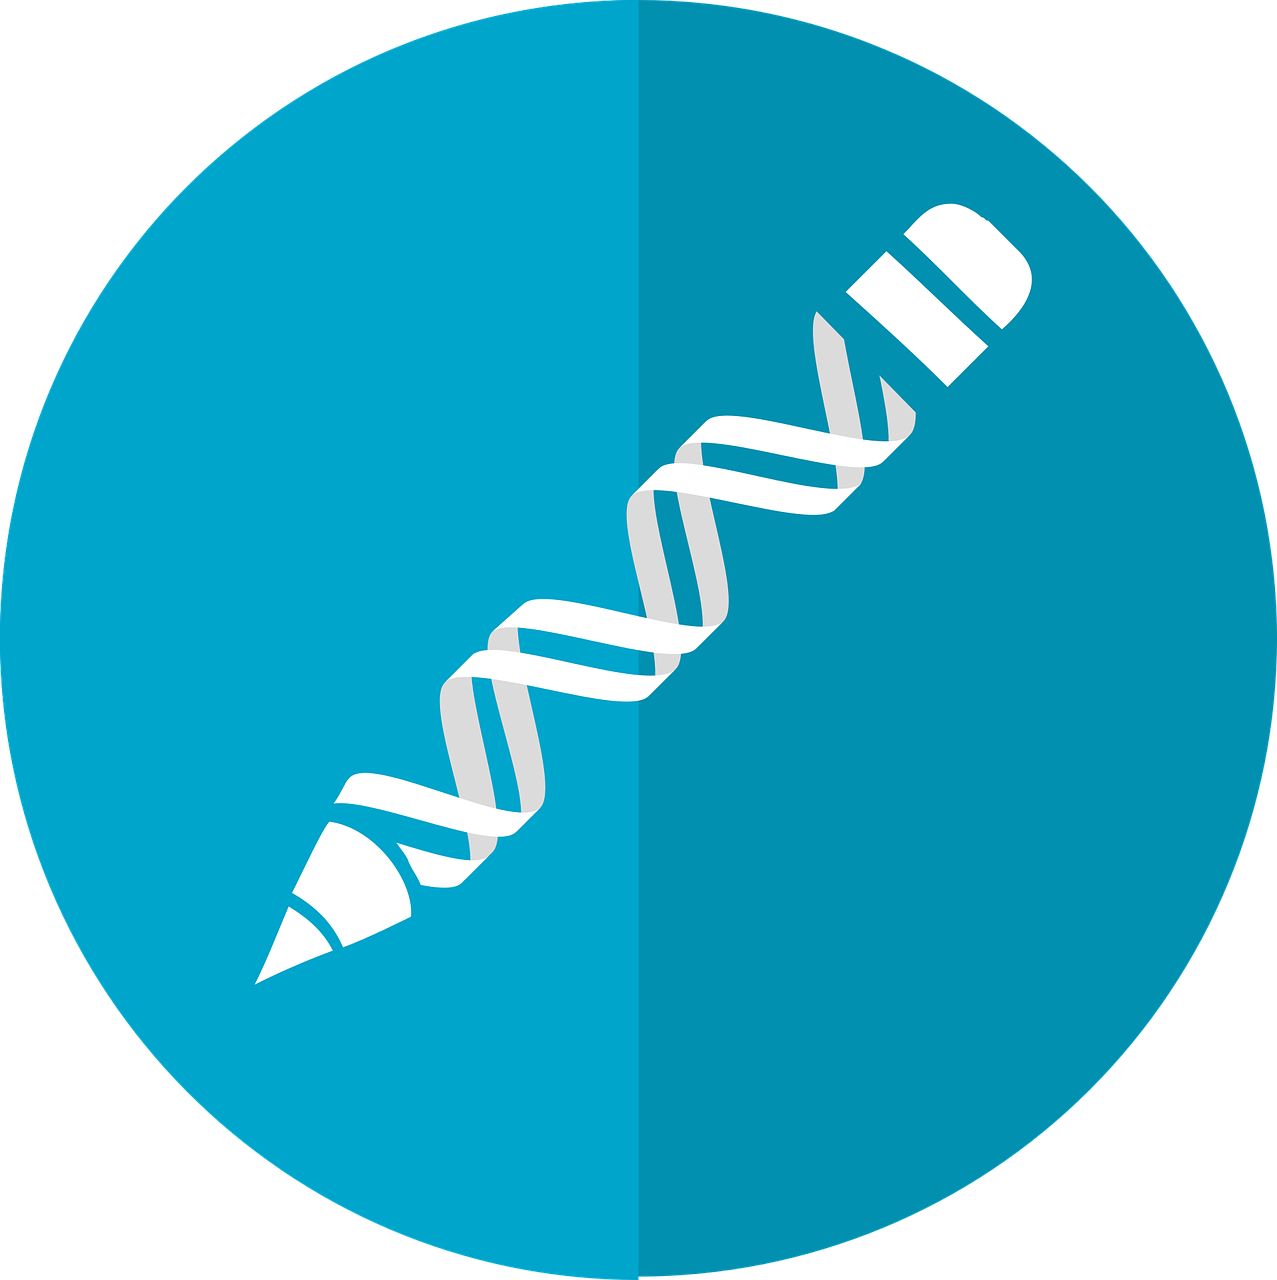 Gene editing,crispr,dna editing,genetic engineering,icon - free image from  needpix.com